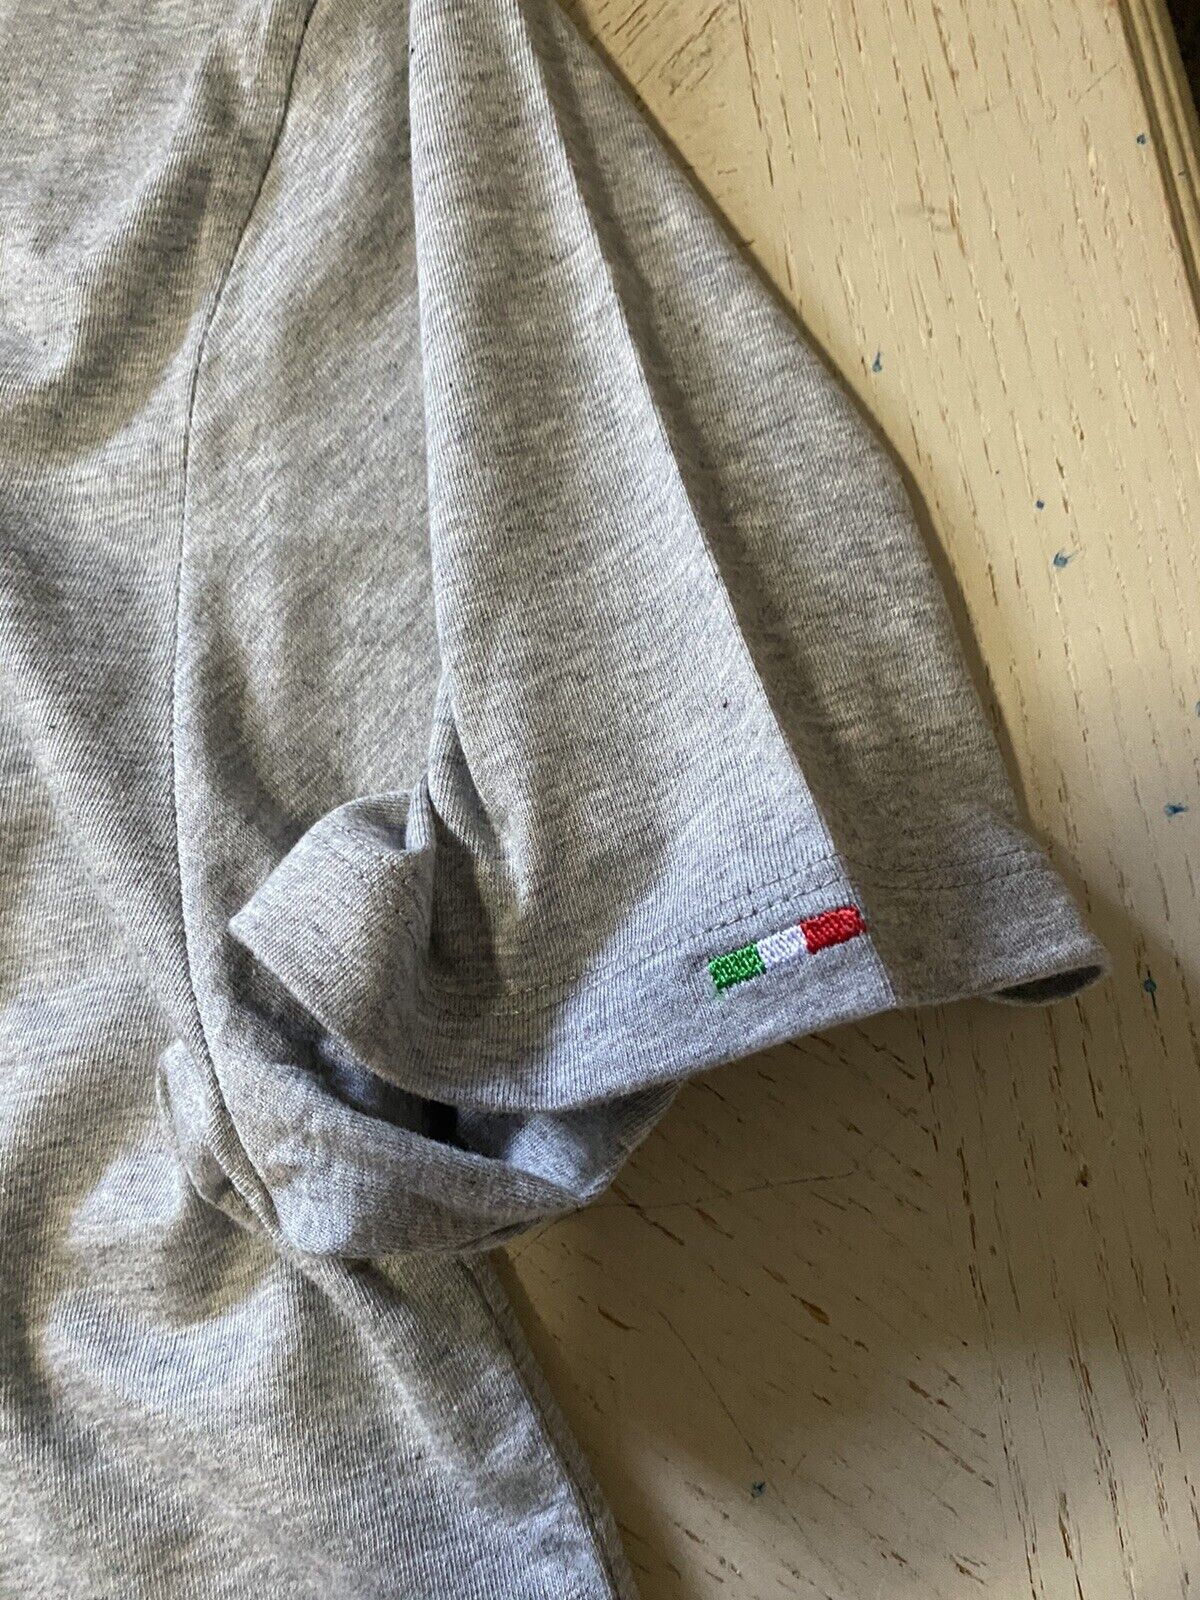 Мужская футболка из хлопкового модала NWT Stefano Ricci, серая, размер XL, США (2XL, ЕС)